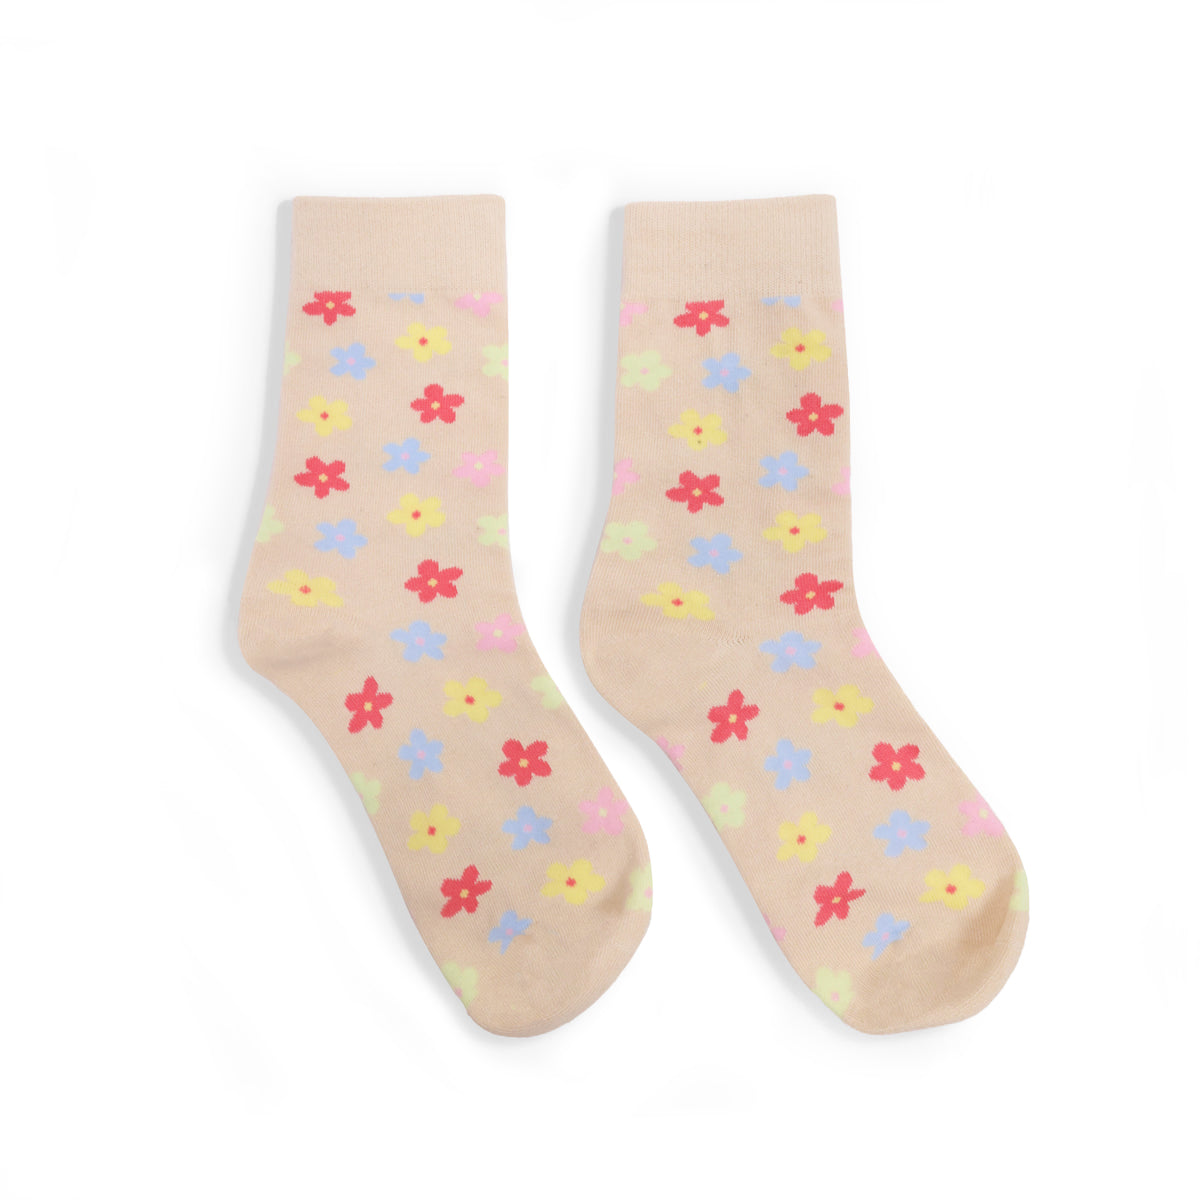 Free Spirit Flower Socks - Accessories - KOI Footwear - Beige - Main View